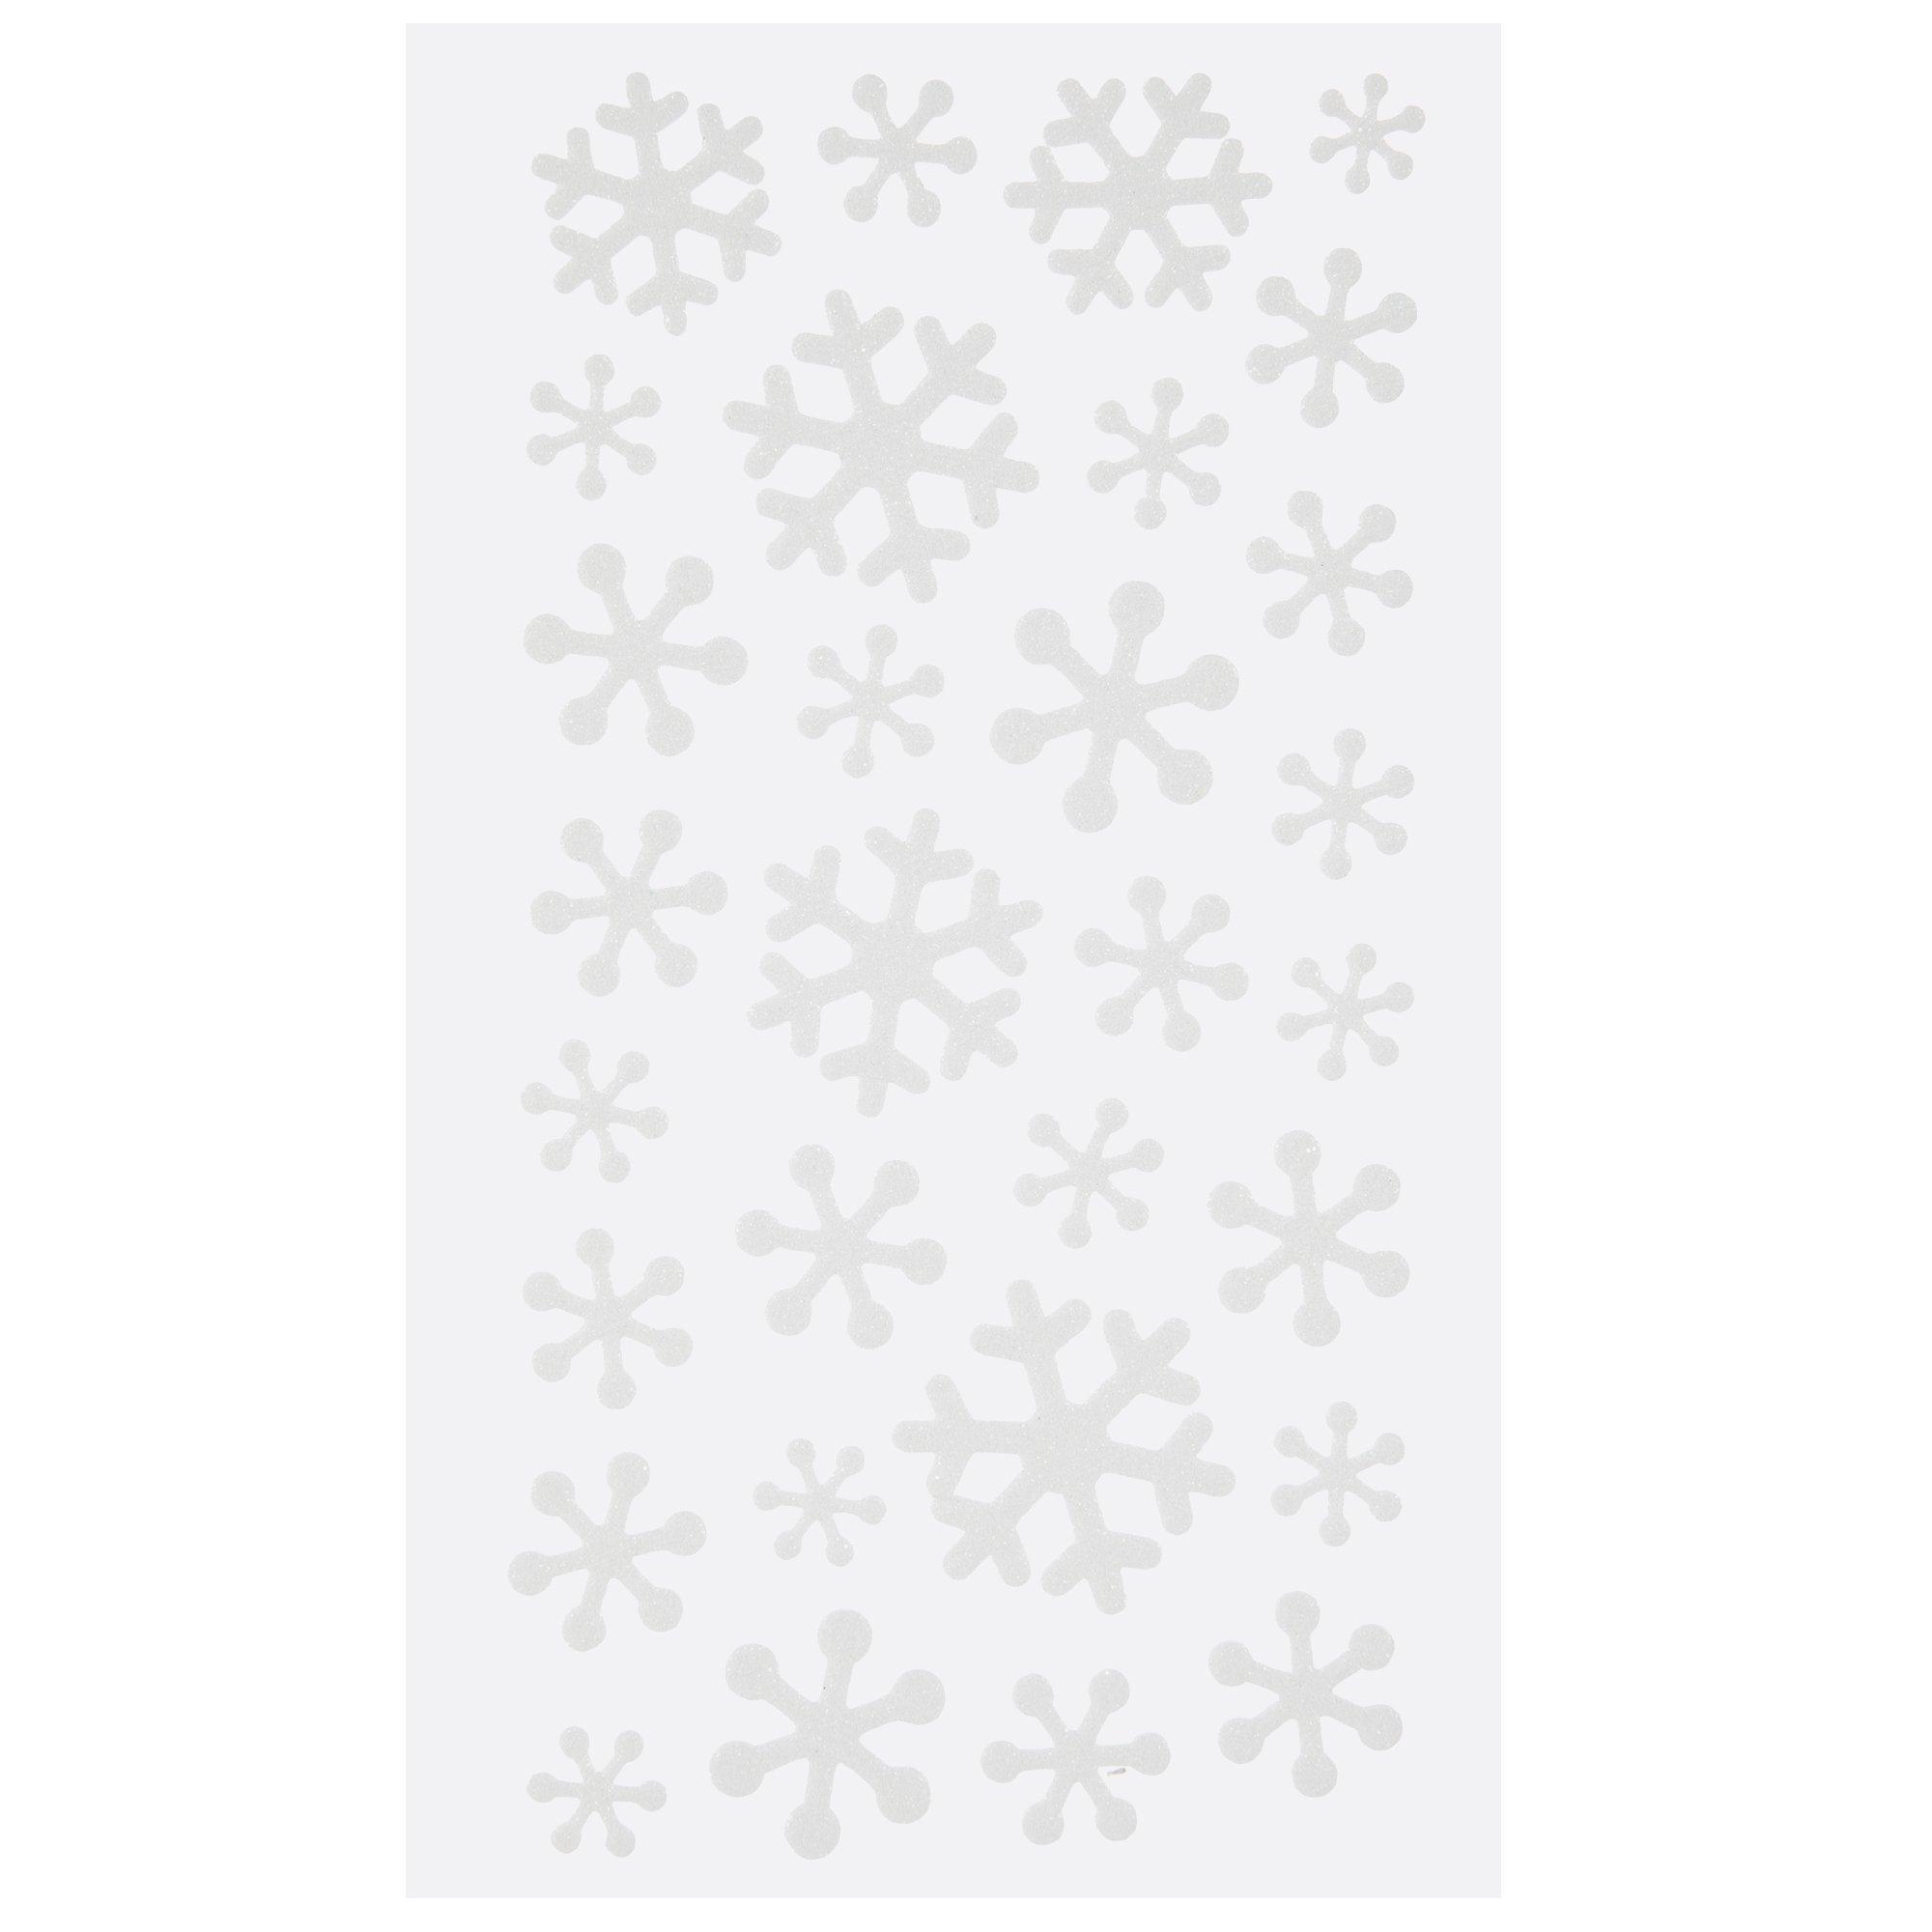 Blue, Silver & White Snowflake Stickers, Hobby Lobby, 5206123